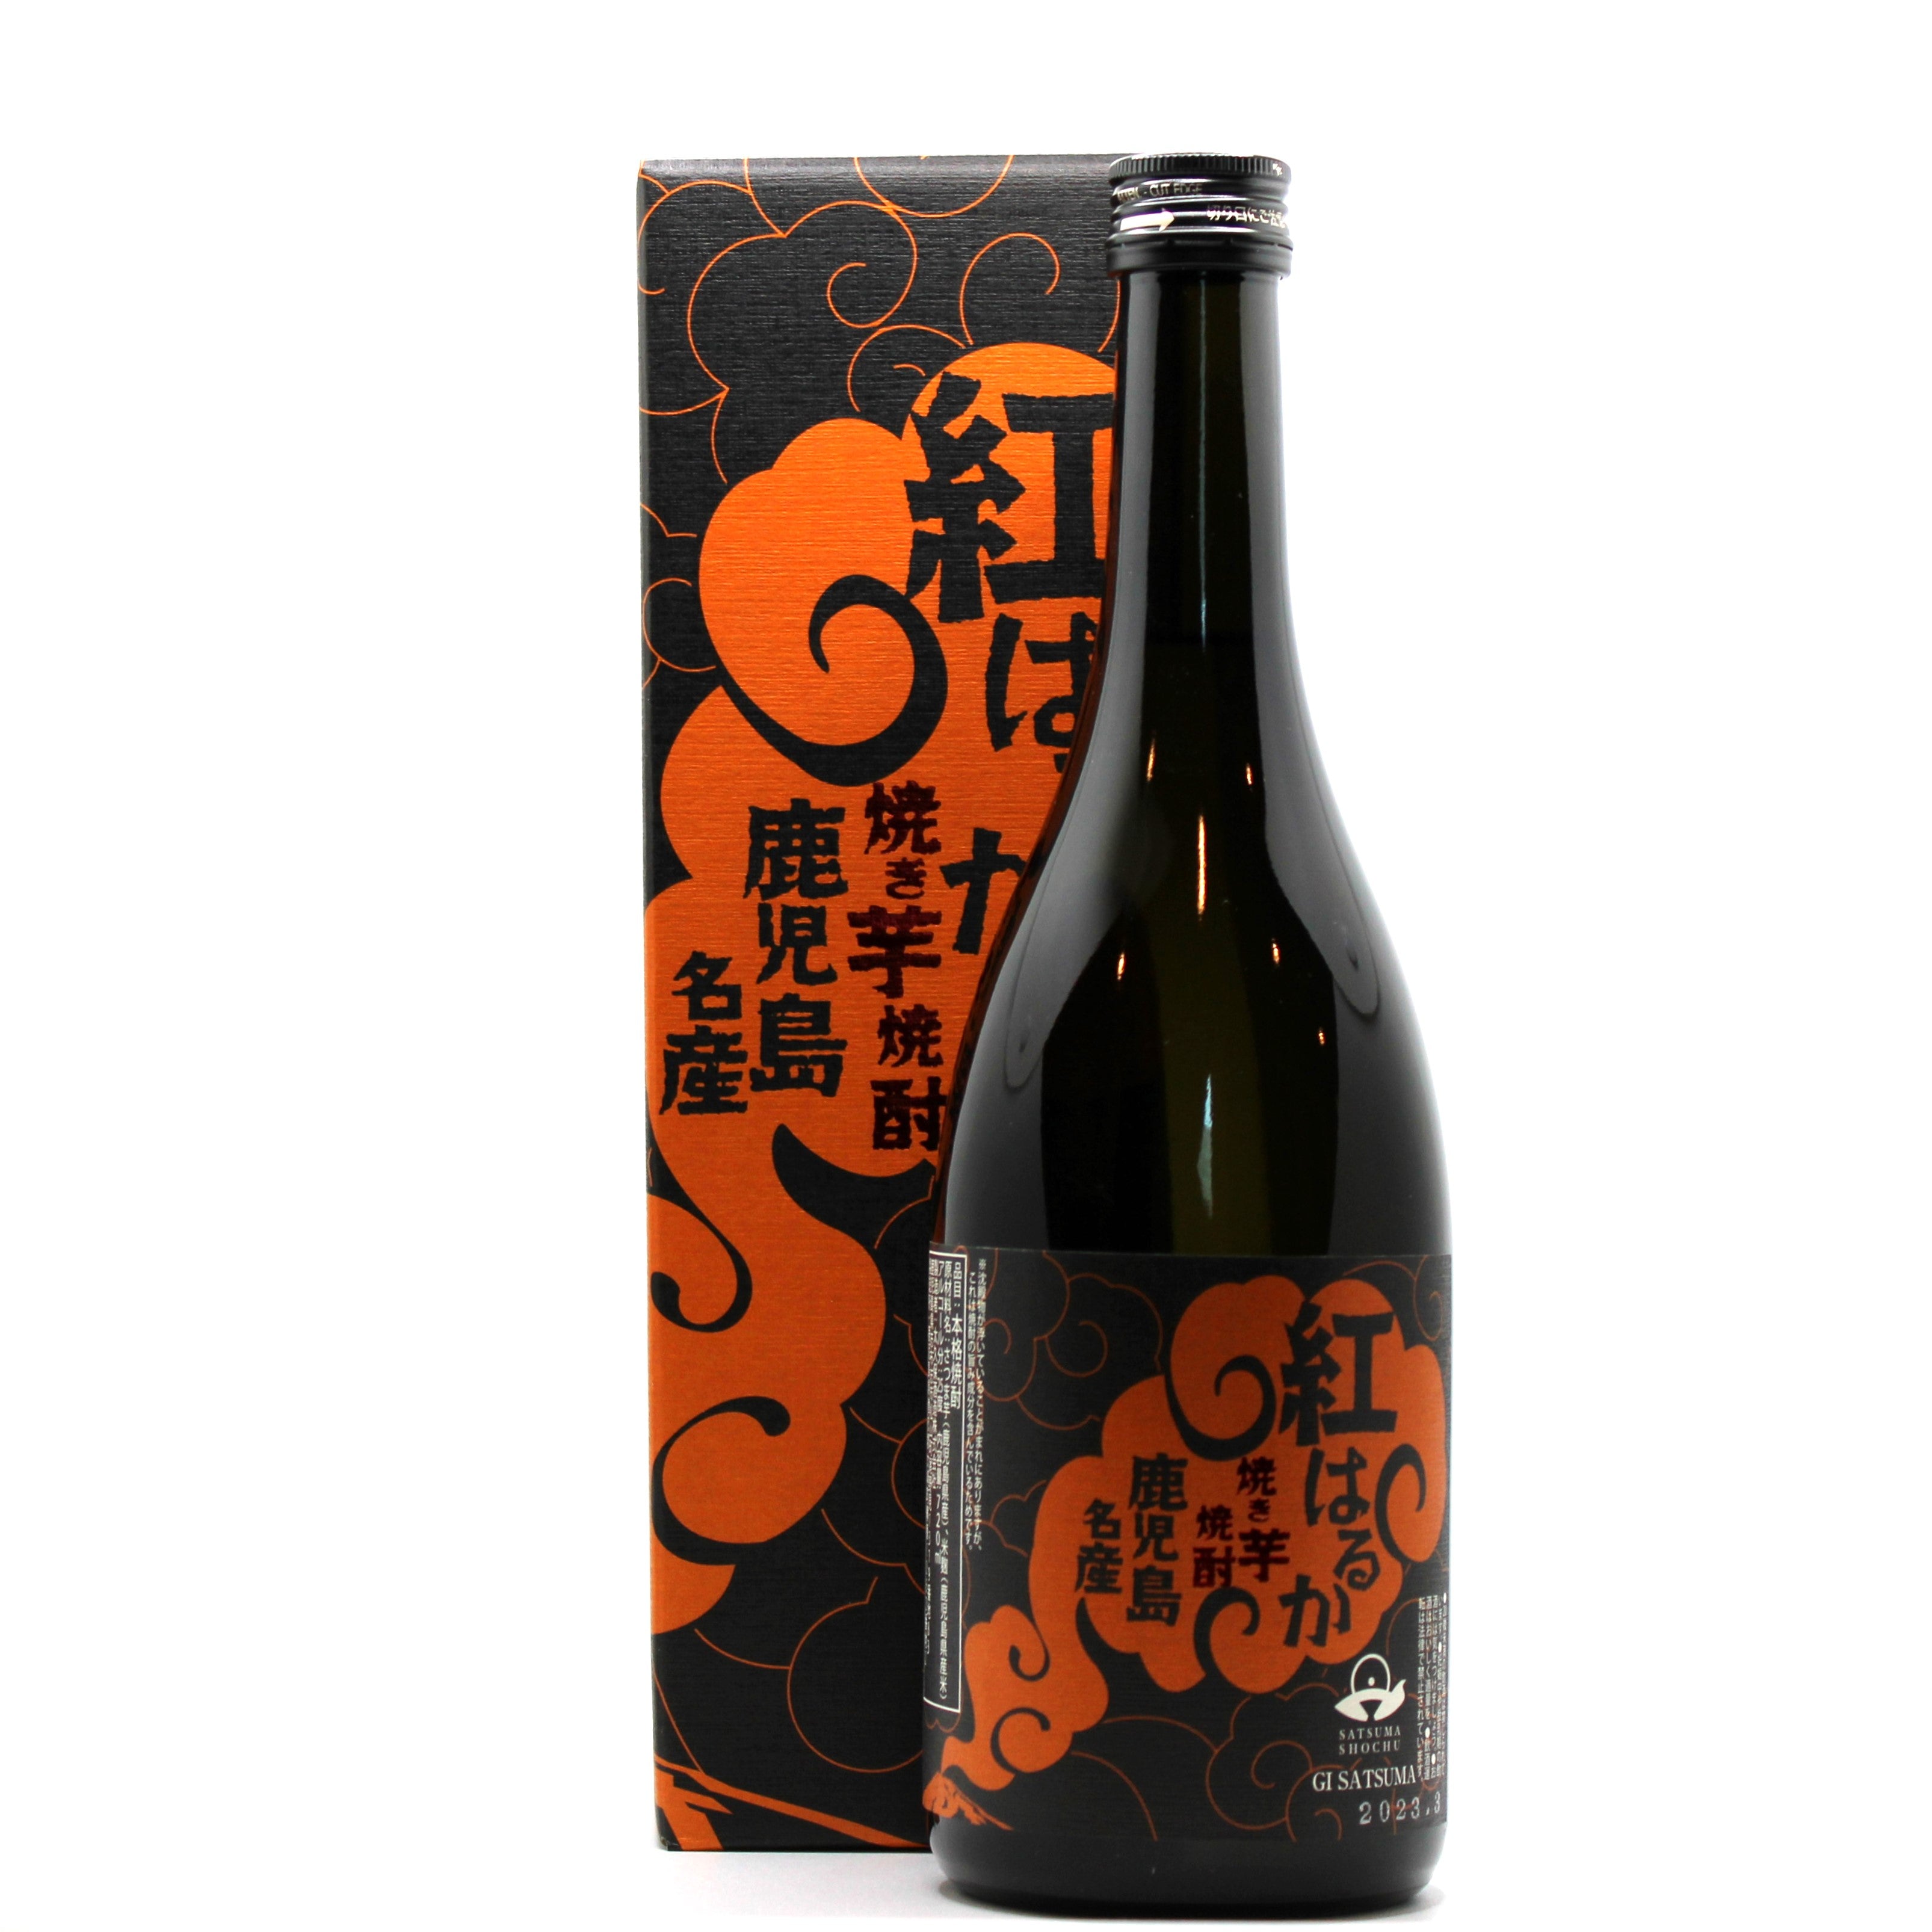 Beni Haruka Yaki IMO (Sweet Potato) Shochu, Kagoshima Japan Limited Edition